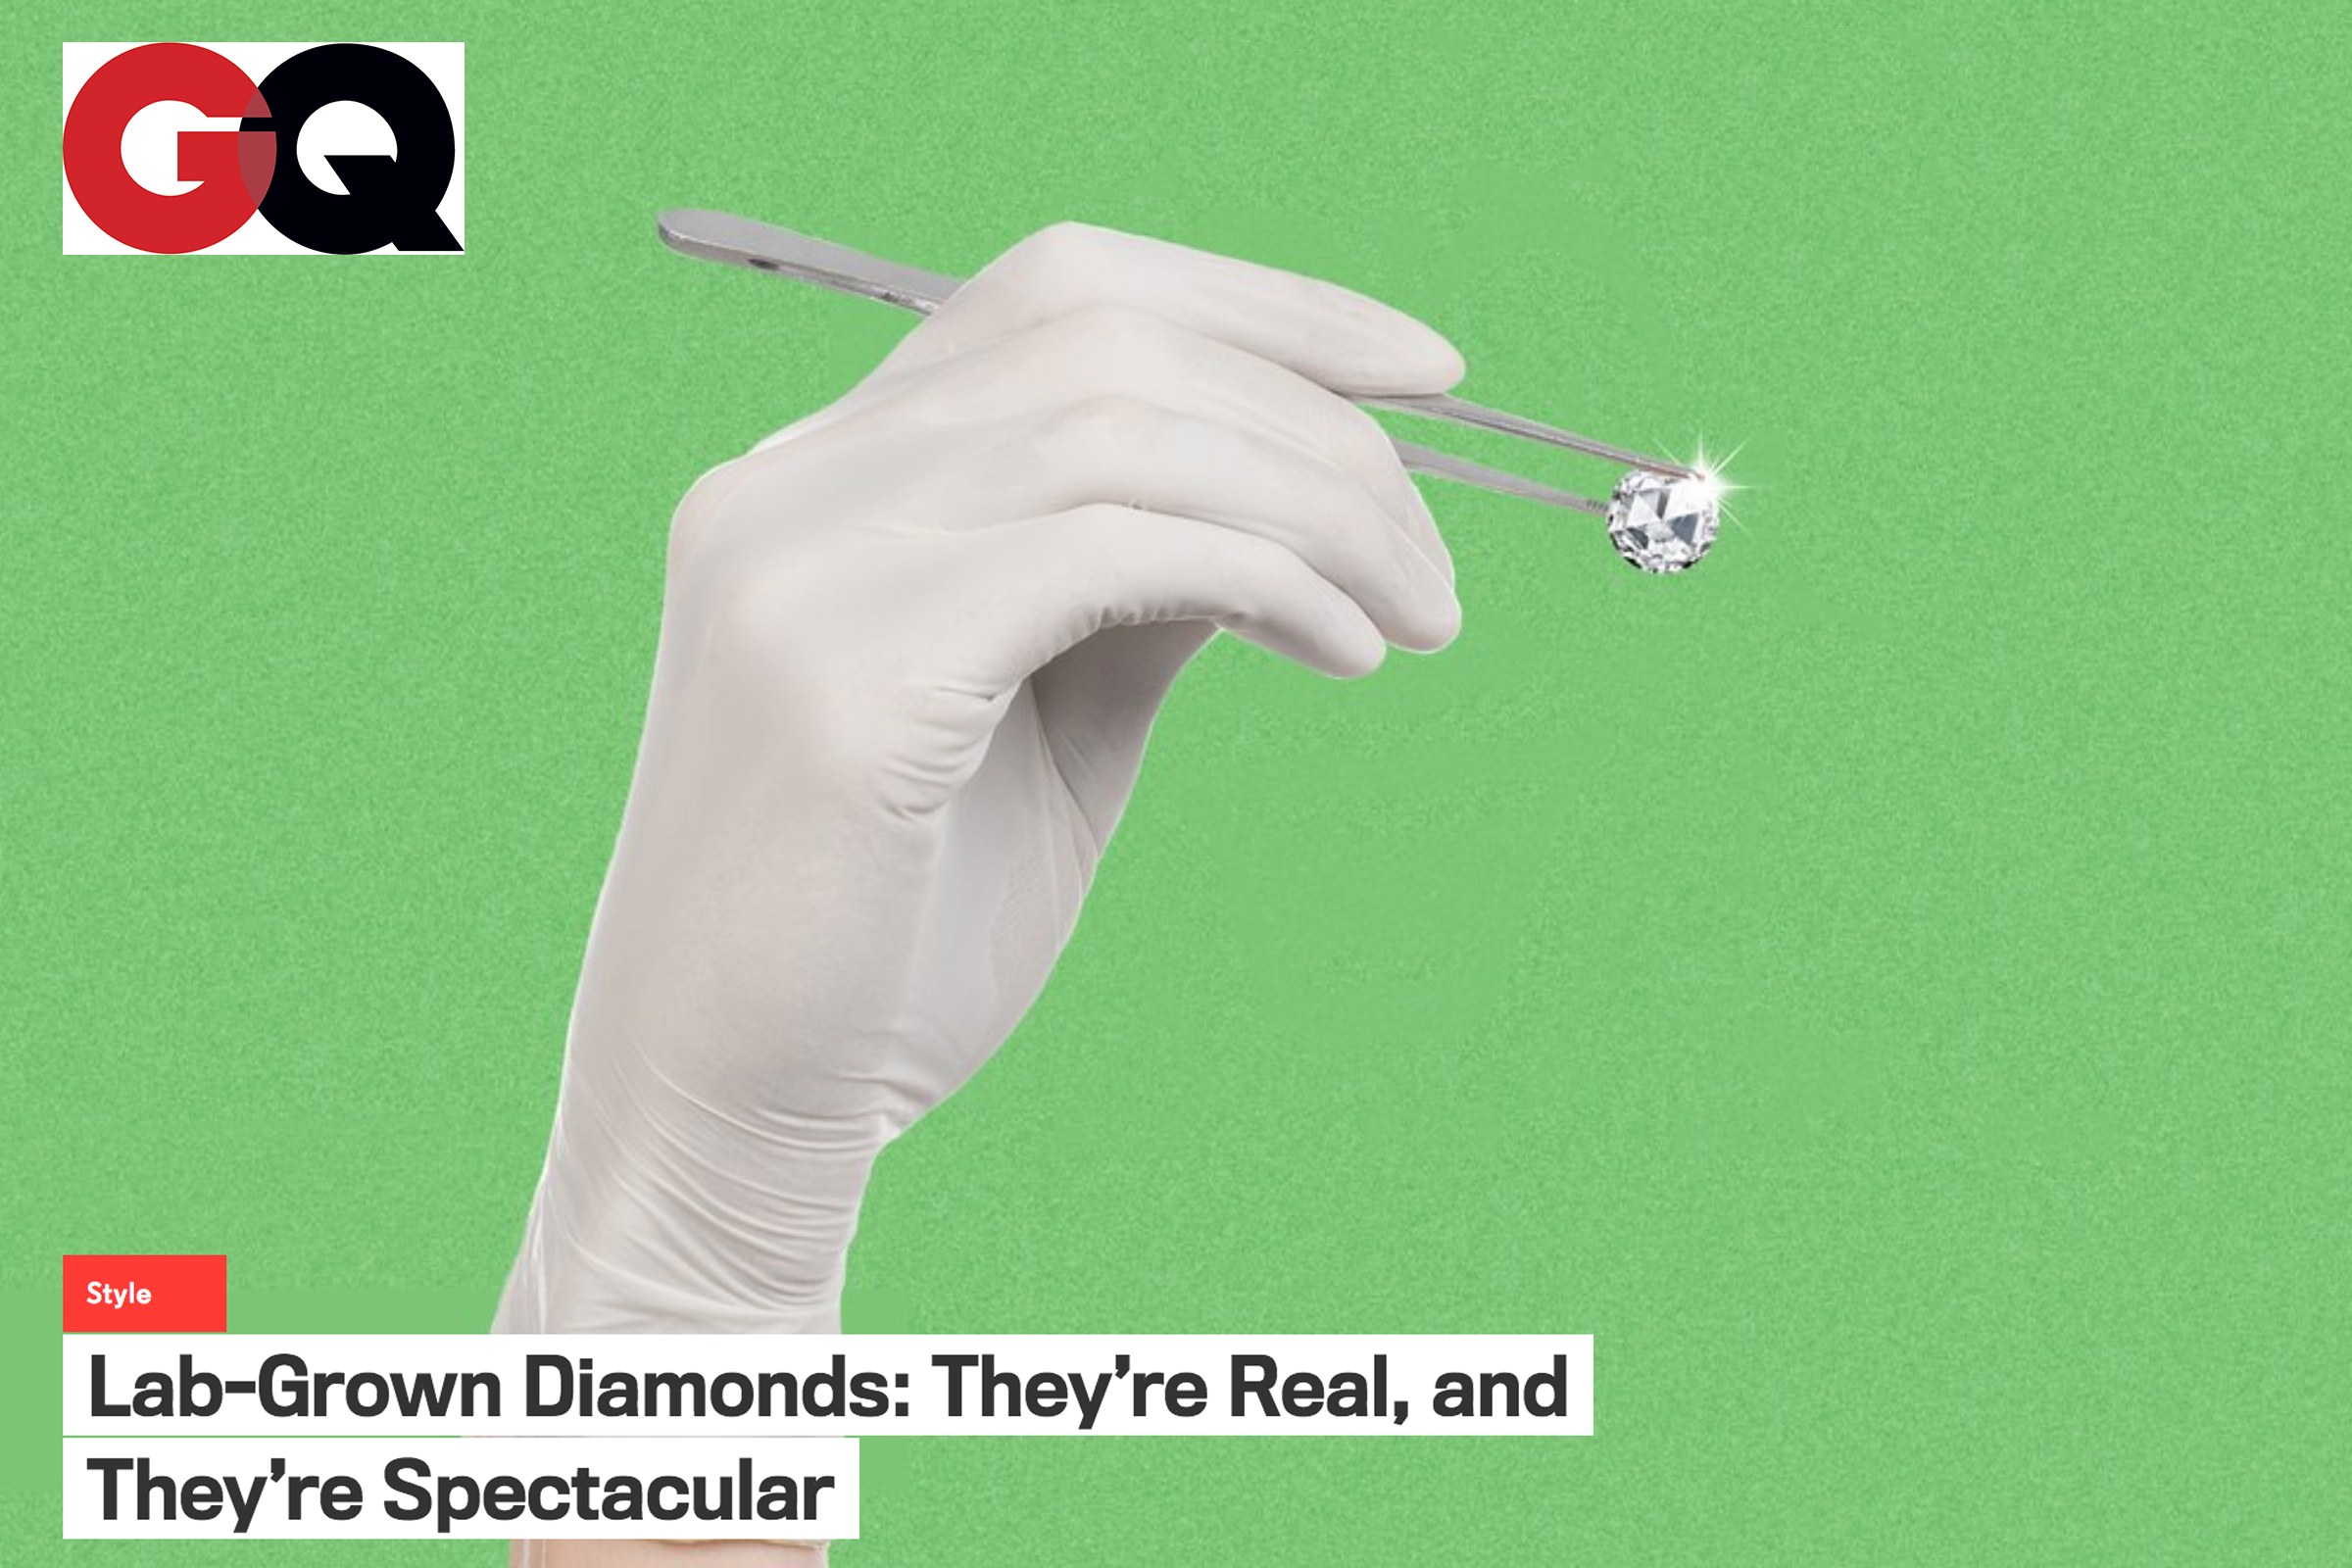 Trendsetter GQ’s Take on Lab-Grown Diamonds